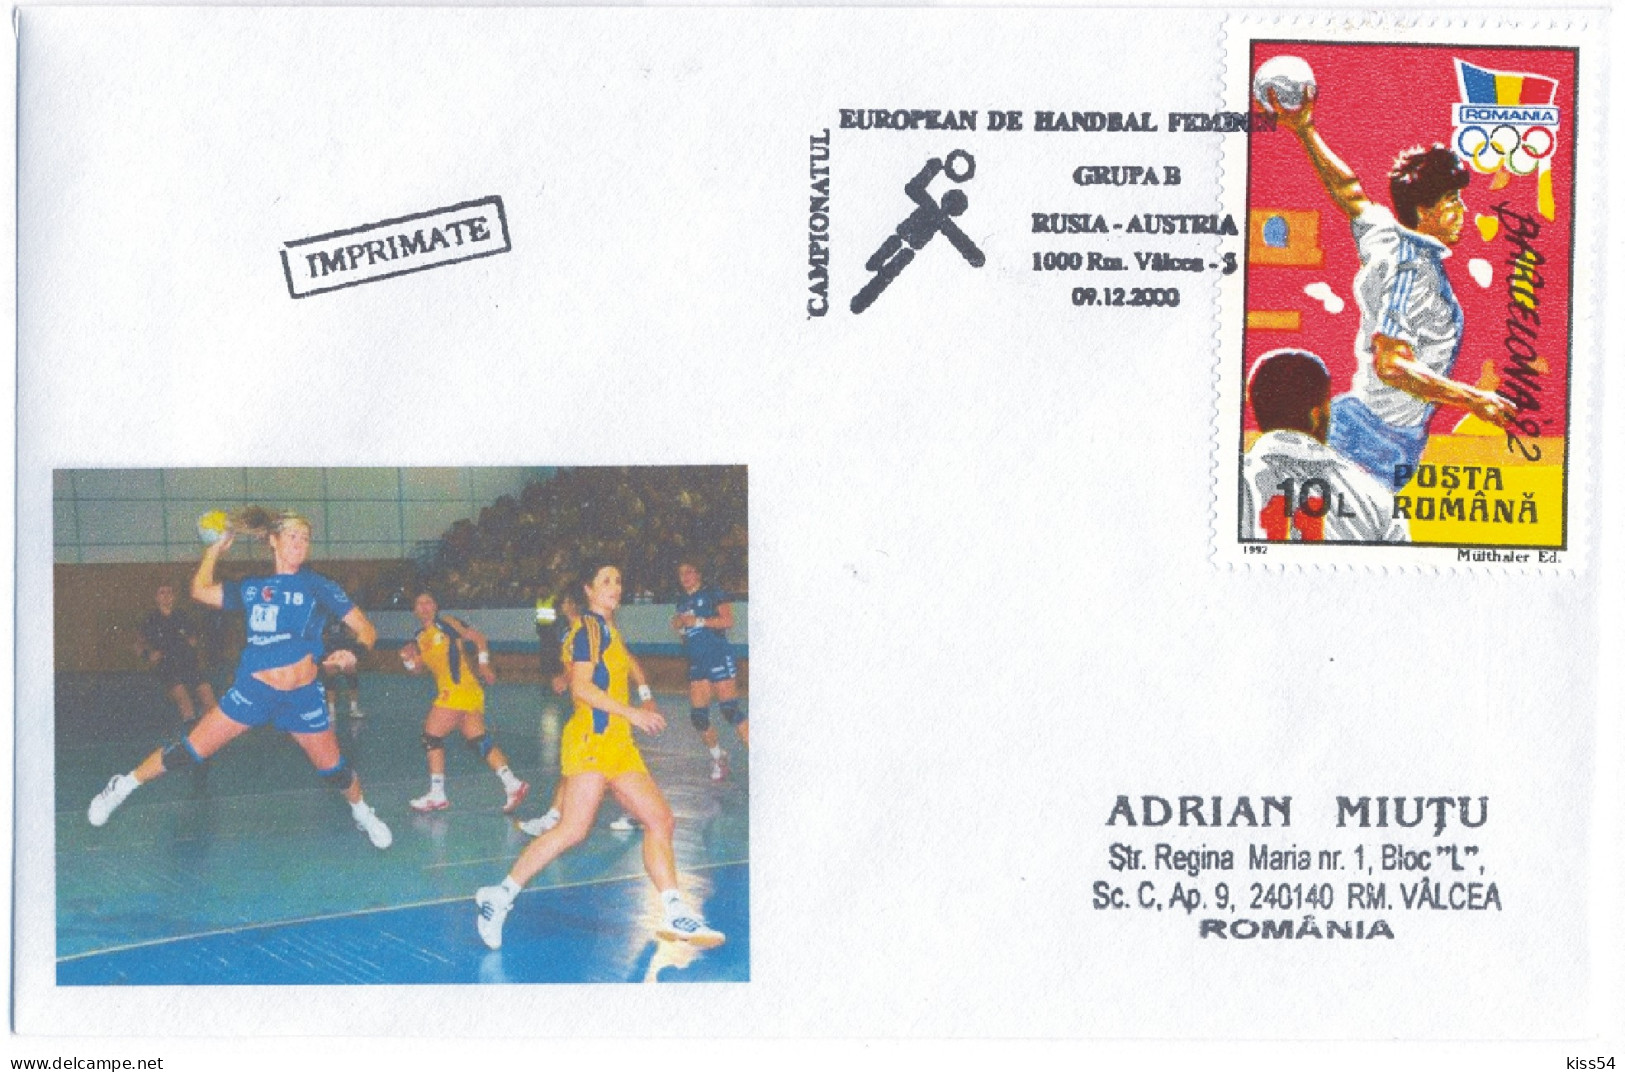 H 2 - 795 Russia - Austria, Handball - WORLD CHAMPIONSHIP 2004 - Cover - 2004 - Handball